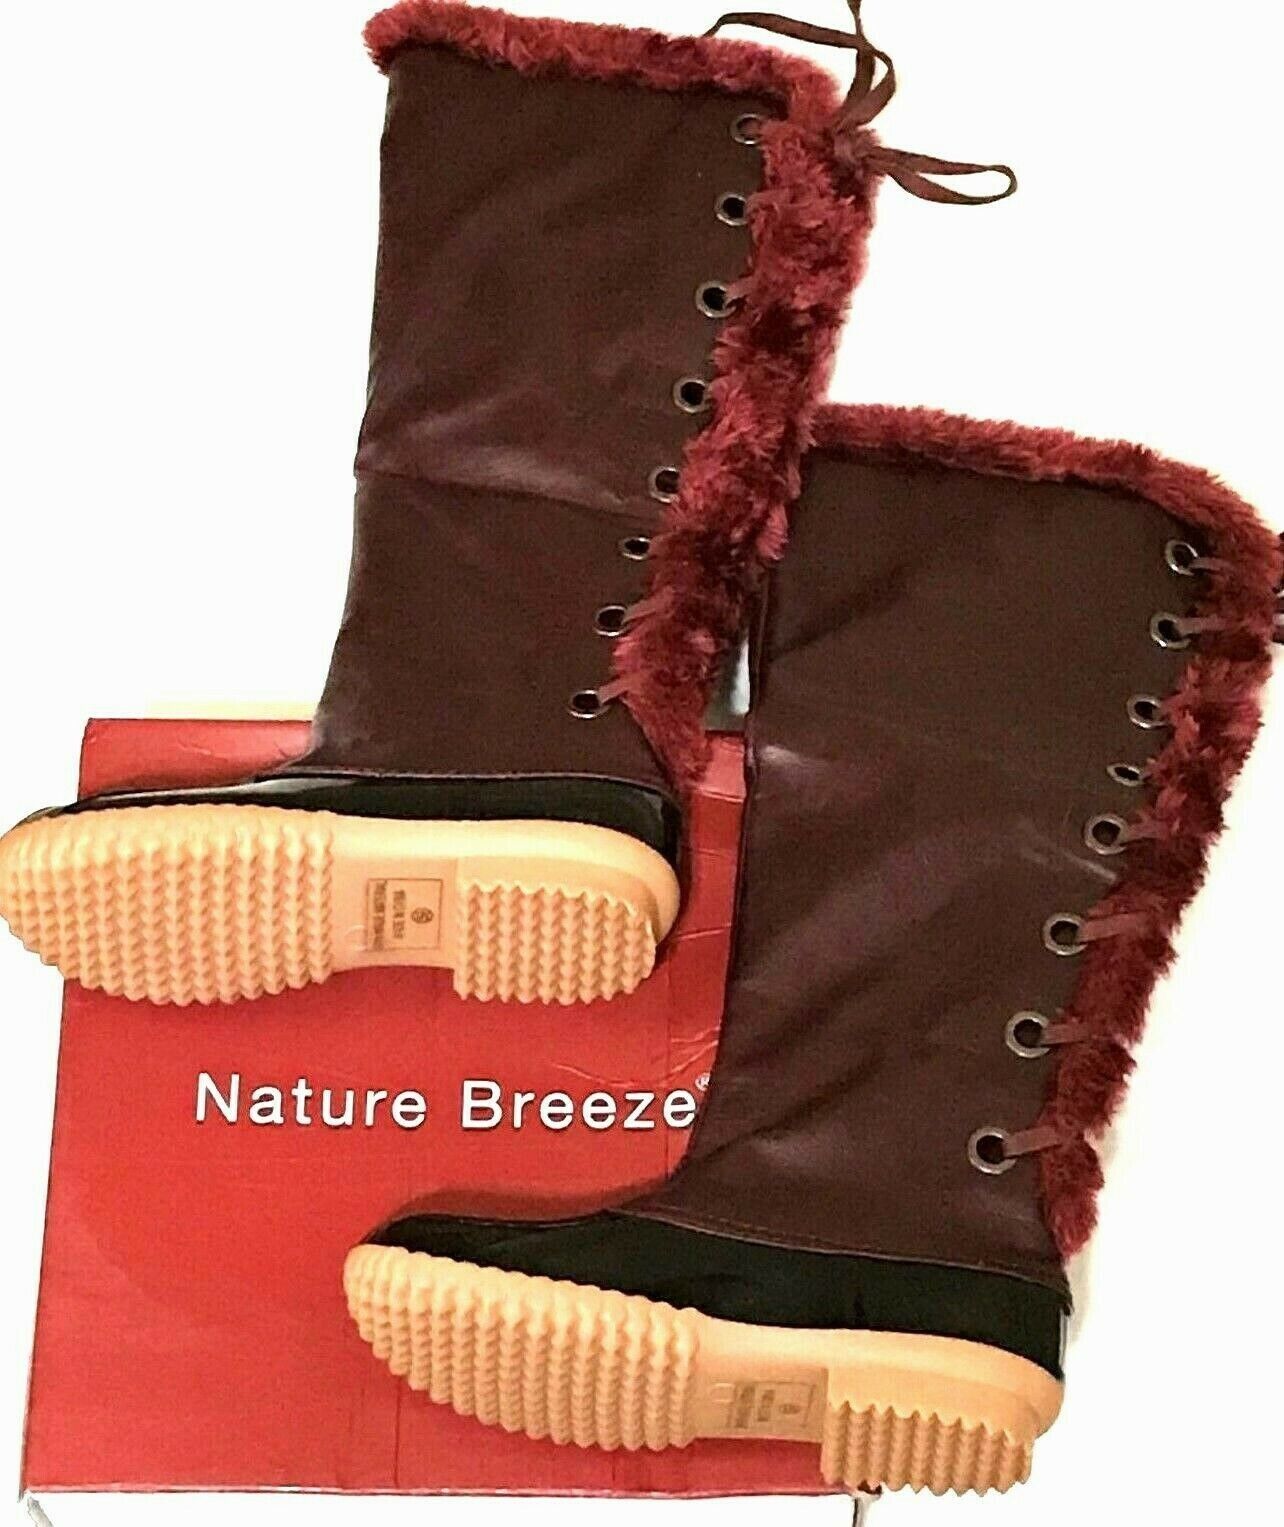 's Rubber Boots Size 5.5 Nature Breeze Knee High Burgundy La